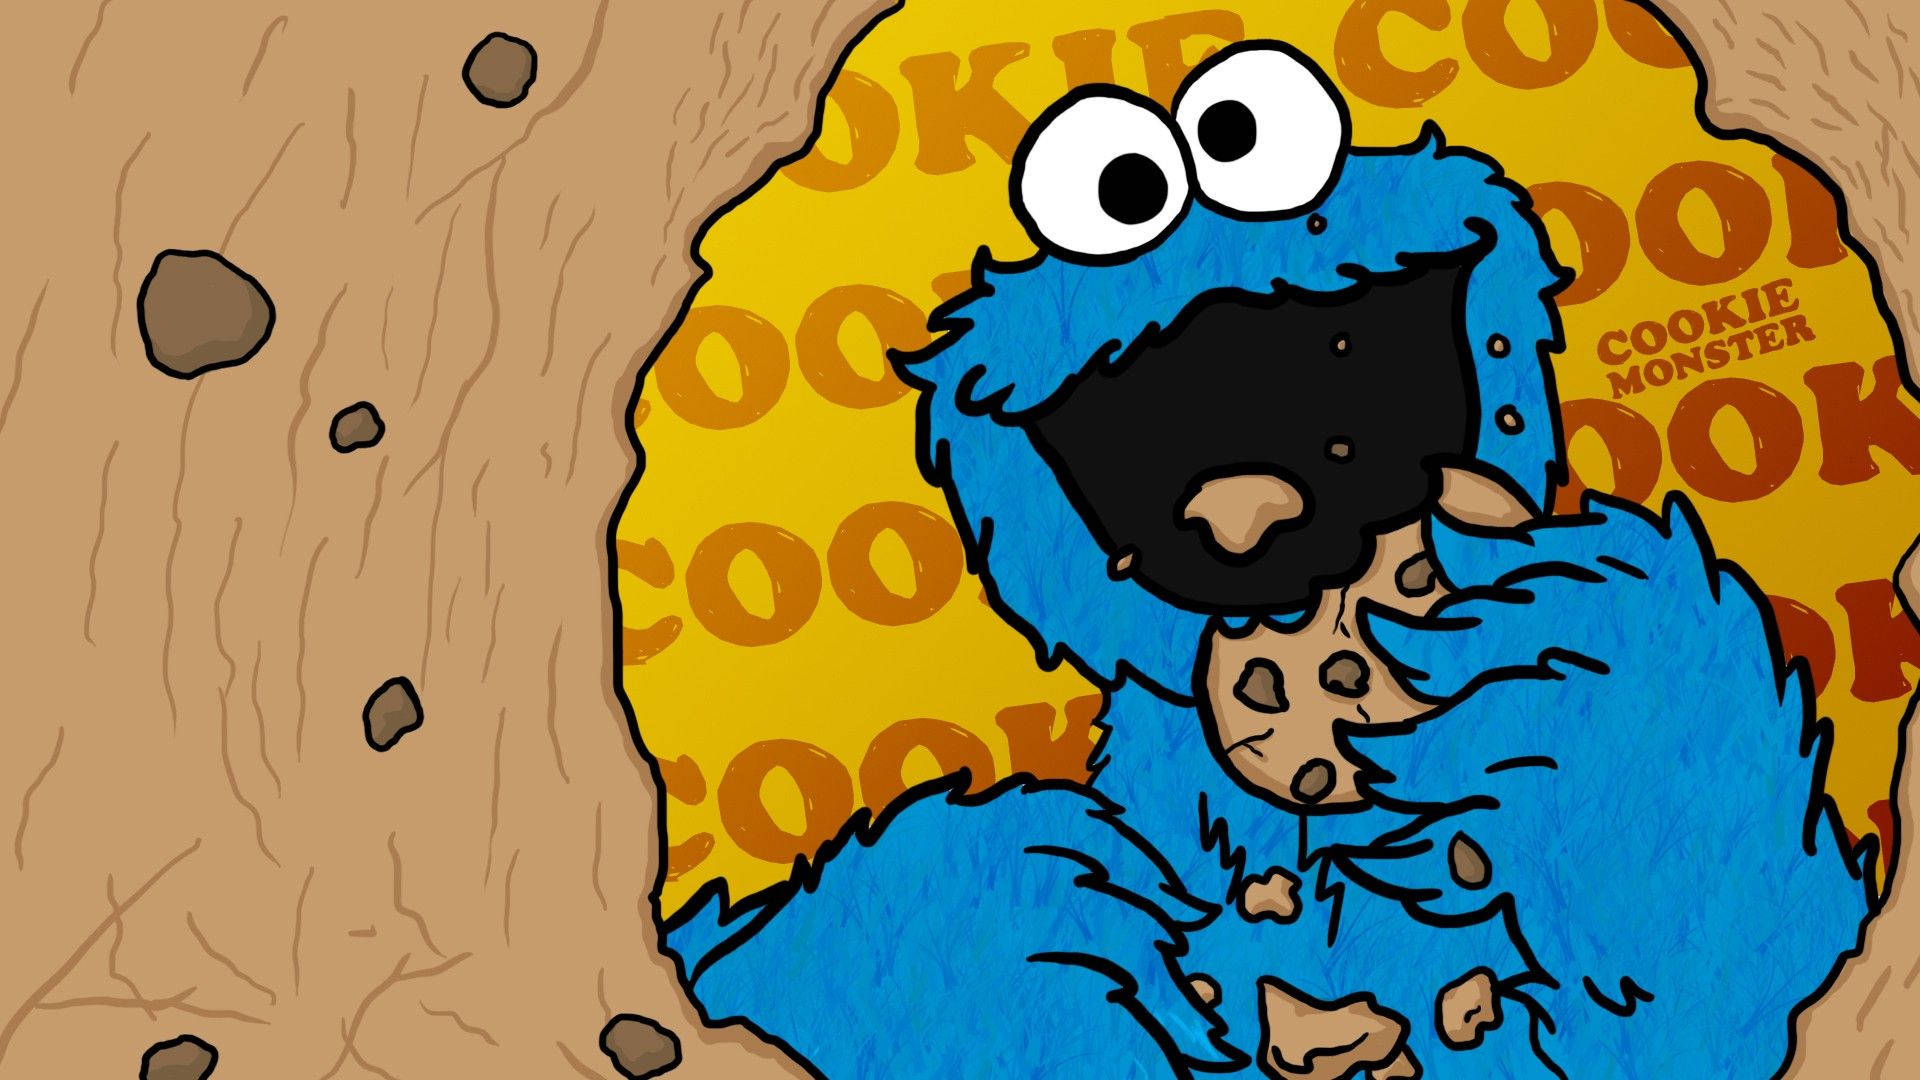 Cartoon Illustration Cookie Monster